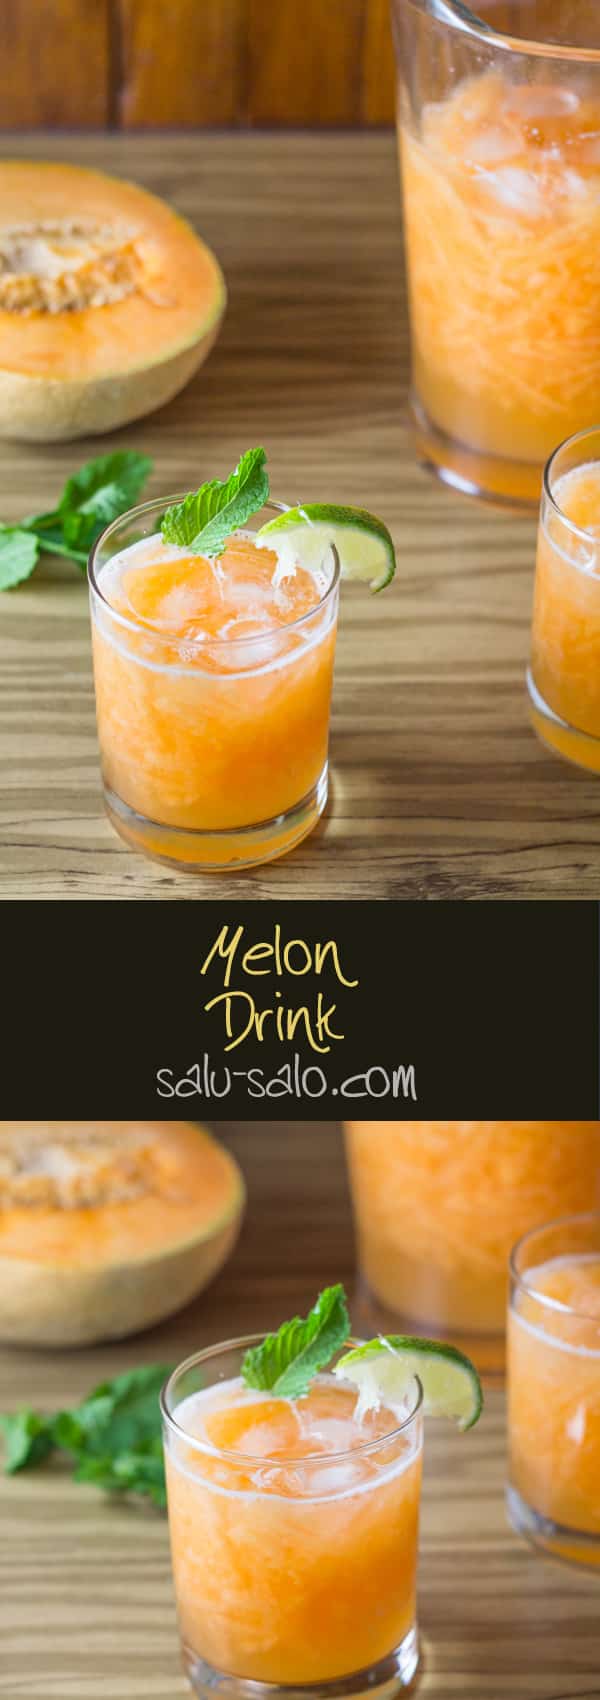 Melon Drink Pin Image